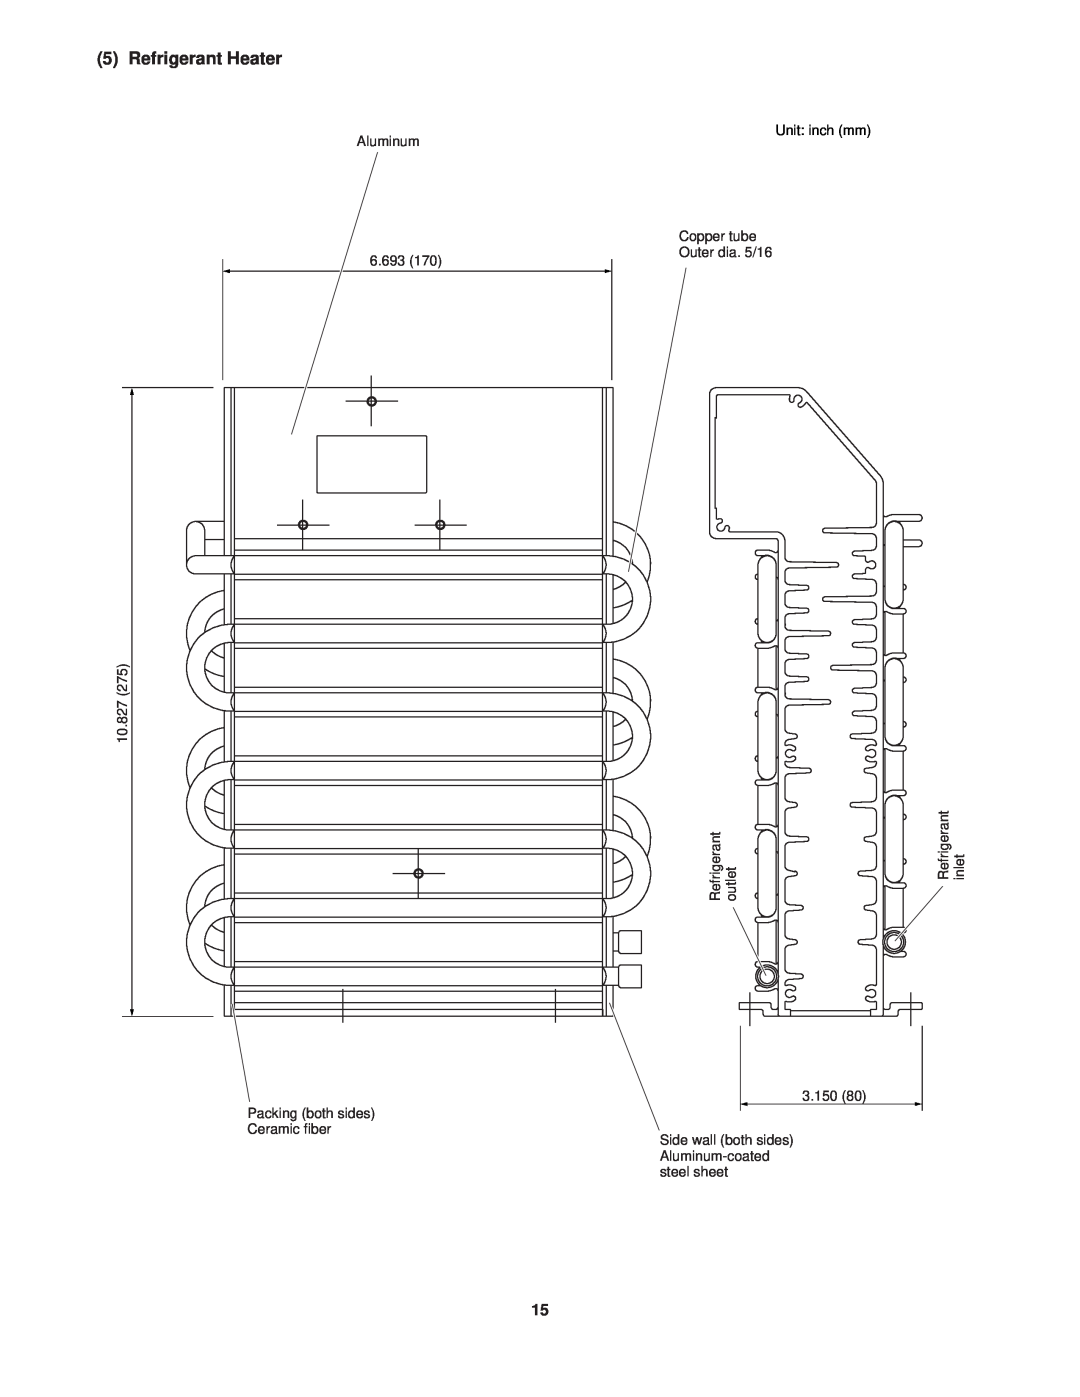 Sanyo KGS1411, CG1411 Refrigerant Heater, Aluminum 6.693 10.827 Packing both sides, Ceramic fiber, outlet, 3.150 